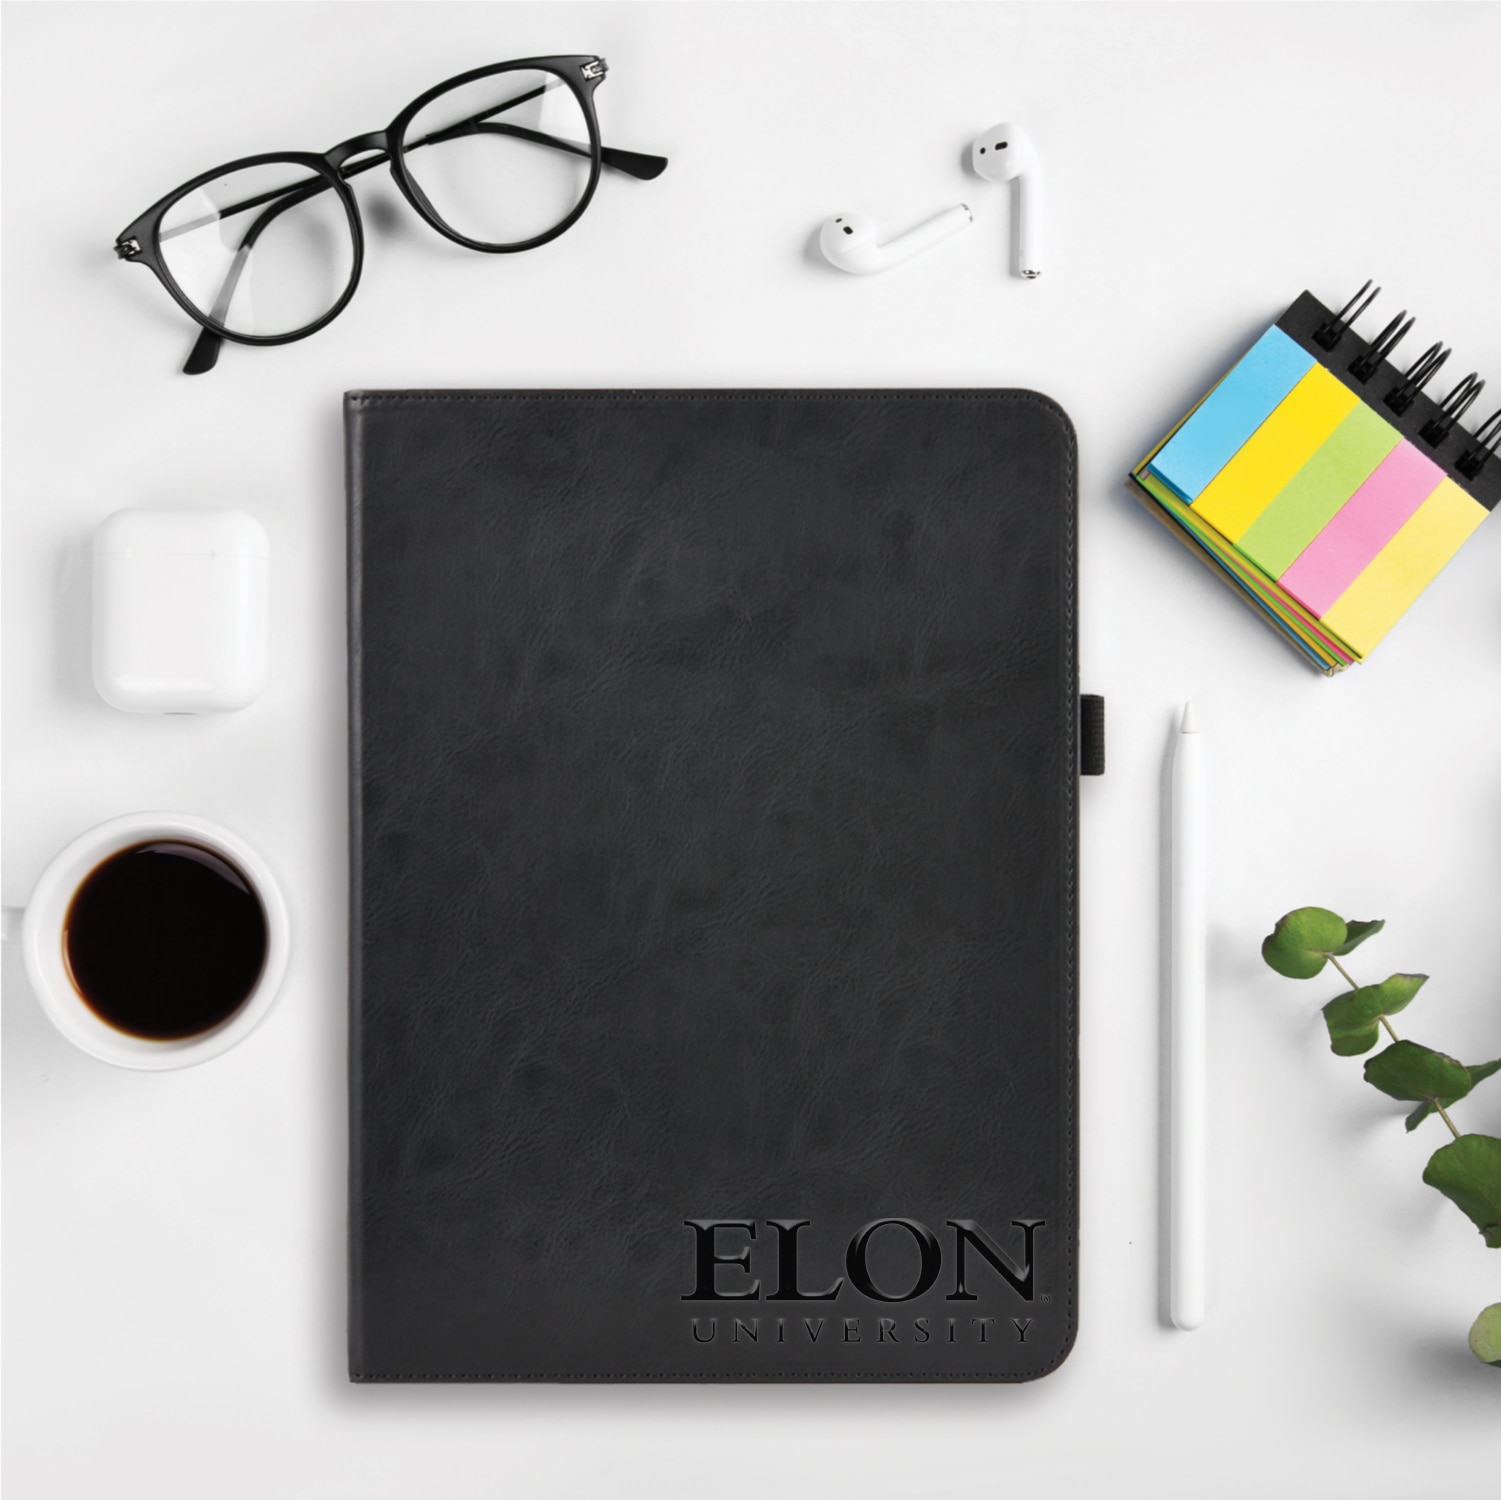 Elon University Black Leather Folio Tablet Case, Alumni V2 - iPad Air (4th gen)